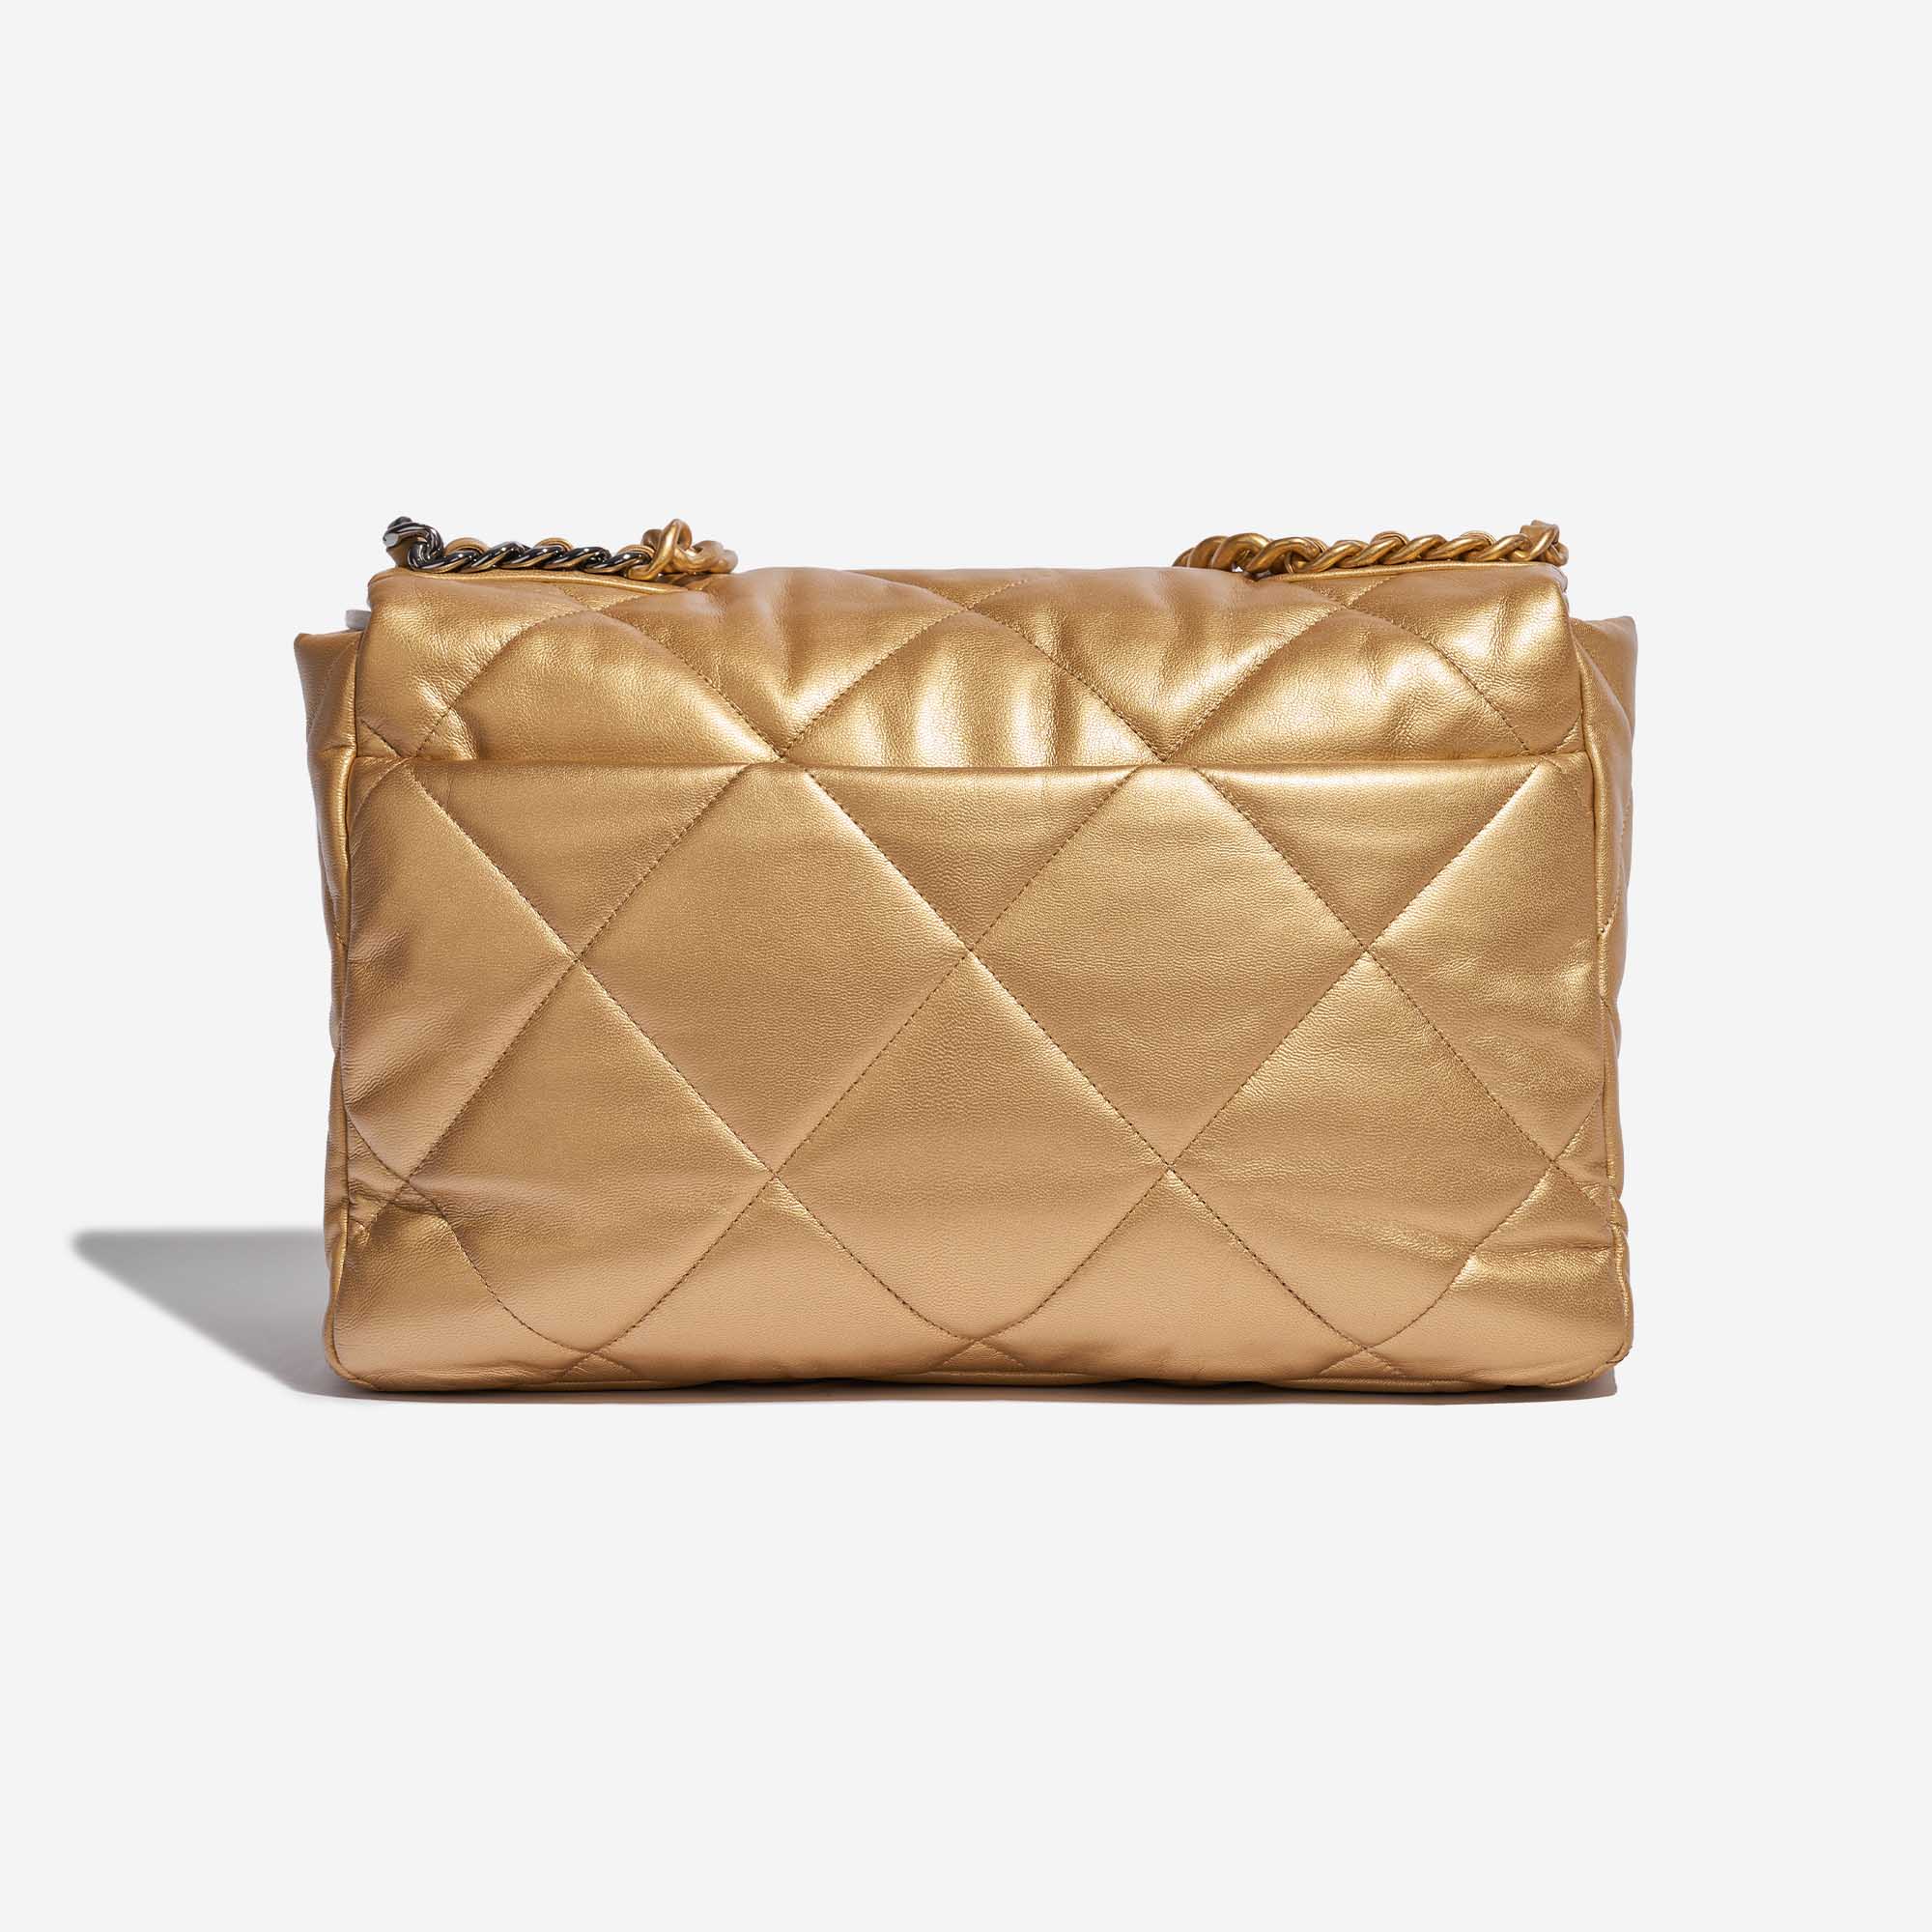 Pre-owned Chanel bag 19 Flap Bag Maxi Lamb Gold Gold Back | Sell your designer bag on Saclab.com